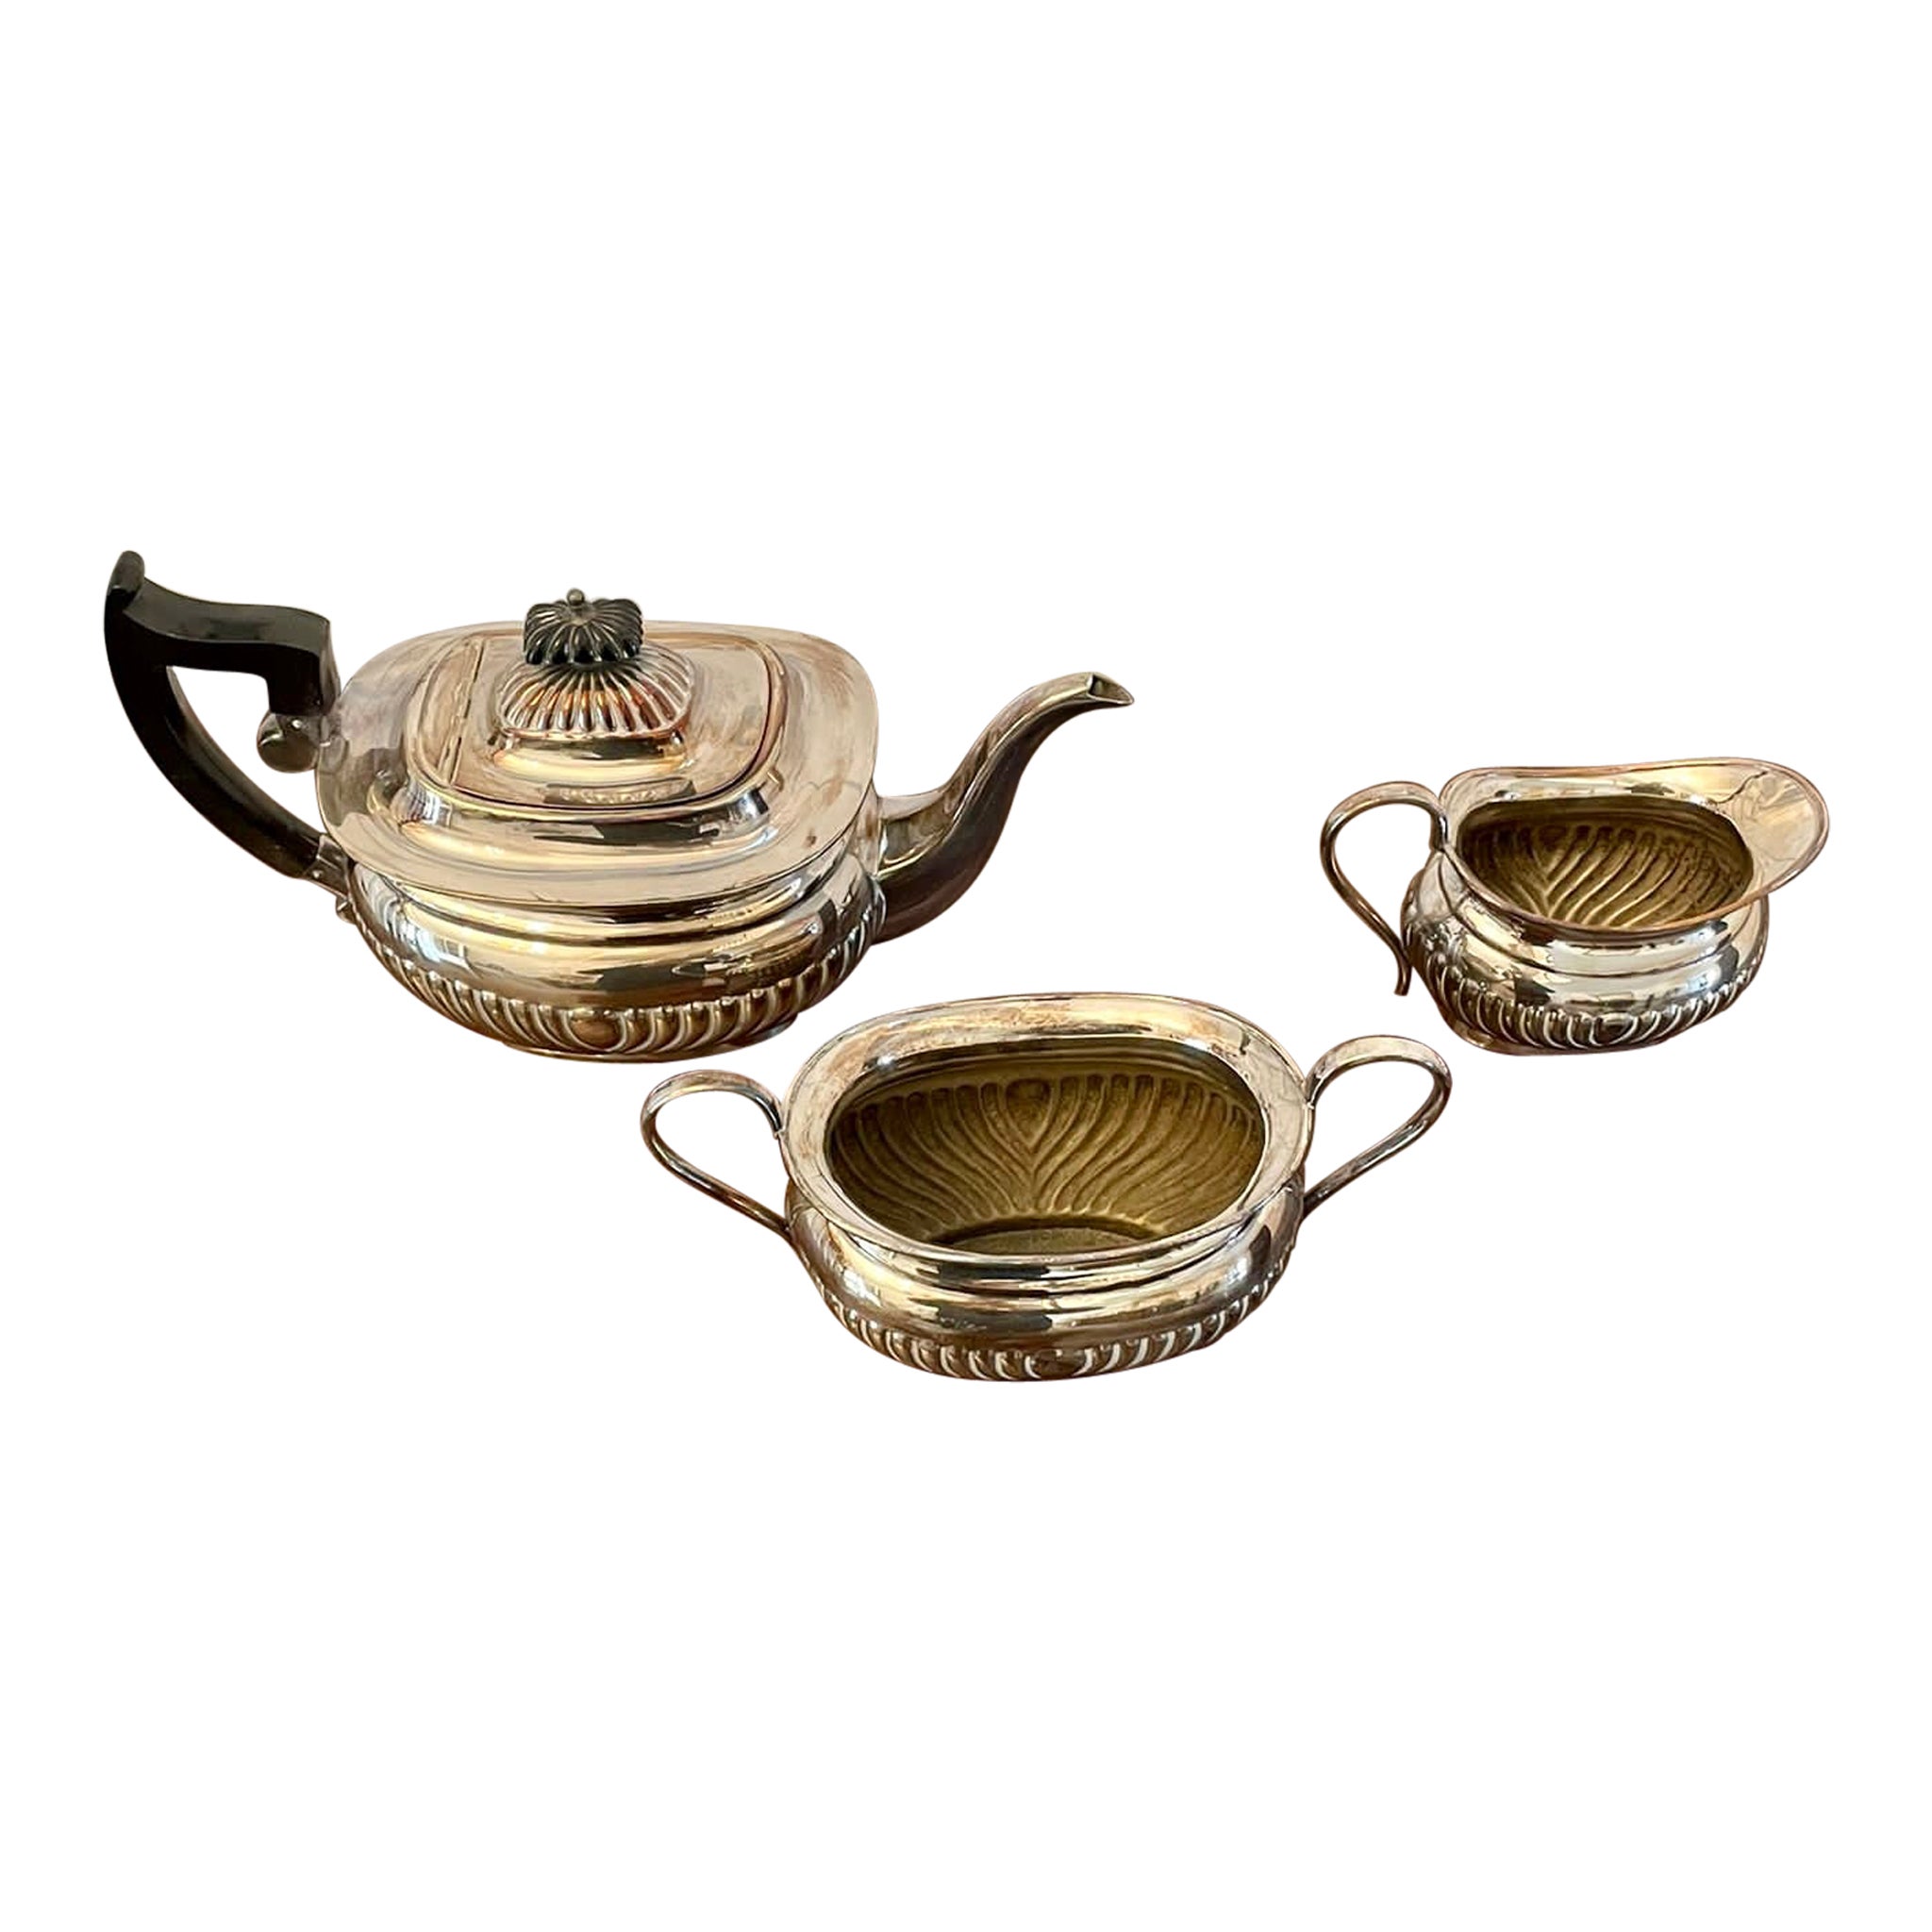  Antique Edwardian Quality Silver Plated Tea Set For Sale